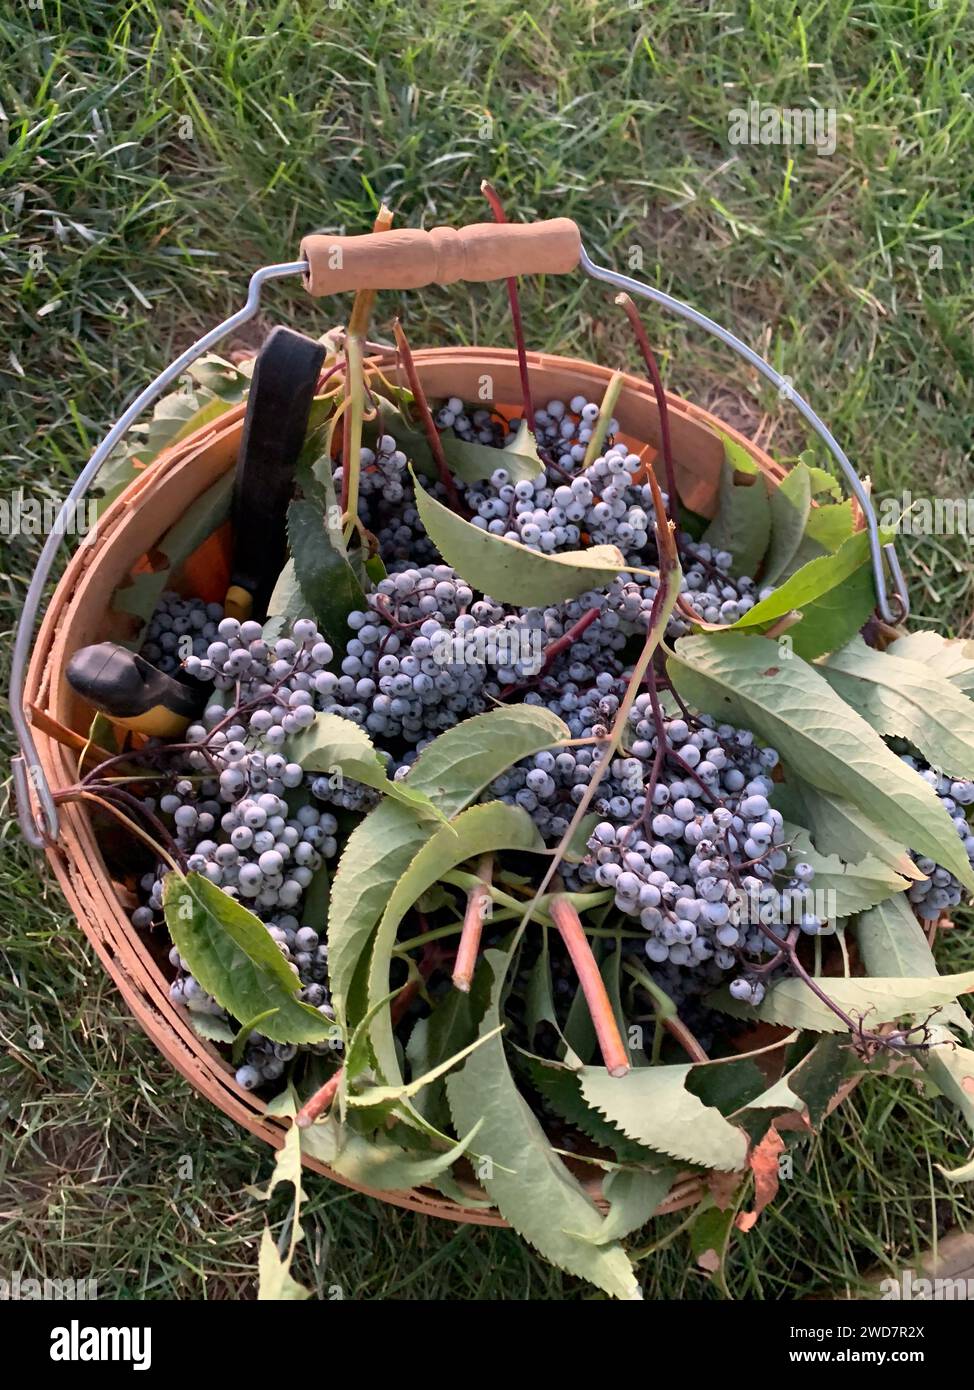 Foraged wild elderberries with garden shears and bucket Stock Photo